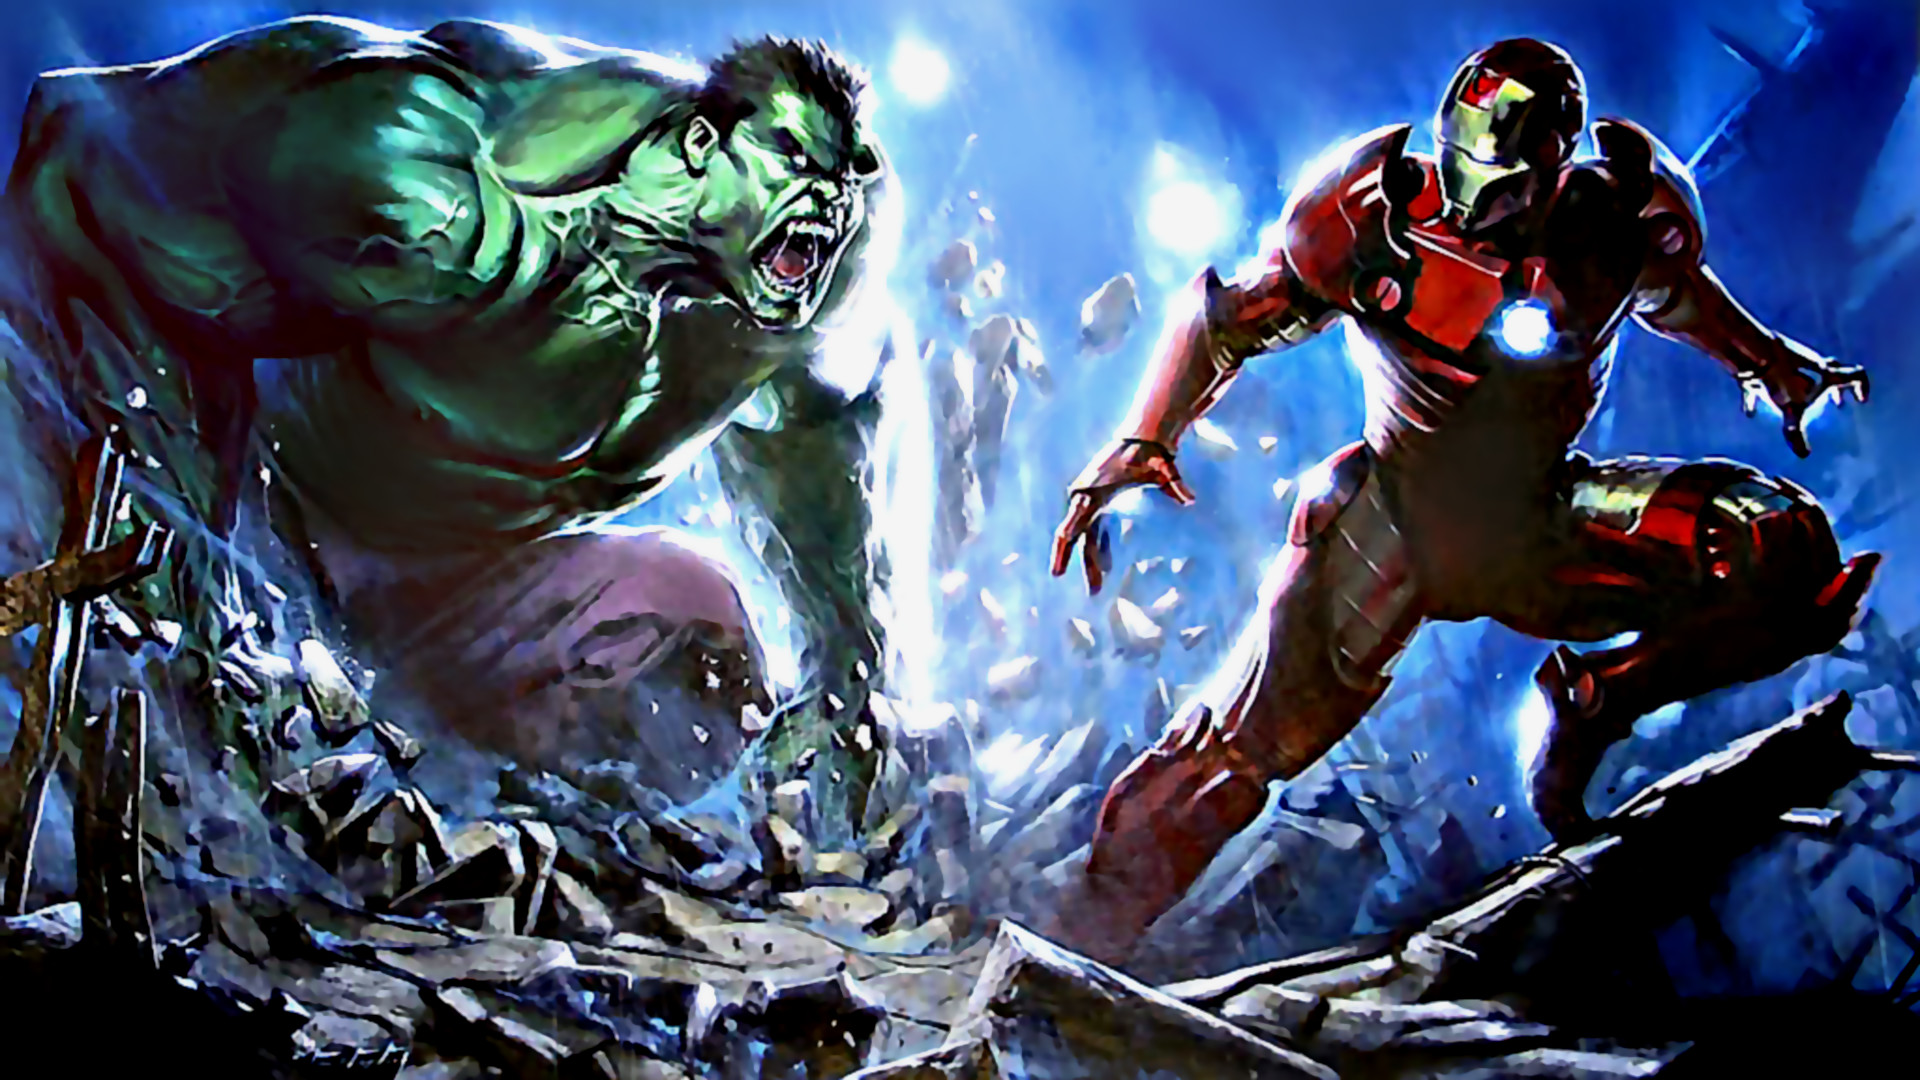 1920x1080 Iron Man Vs The Incredible Hulk #2 HD Wallpaper by  tommospidey.deviantart.com